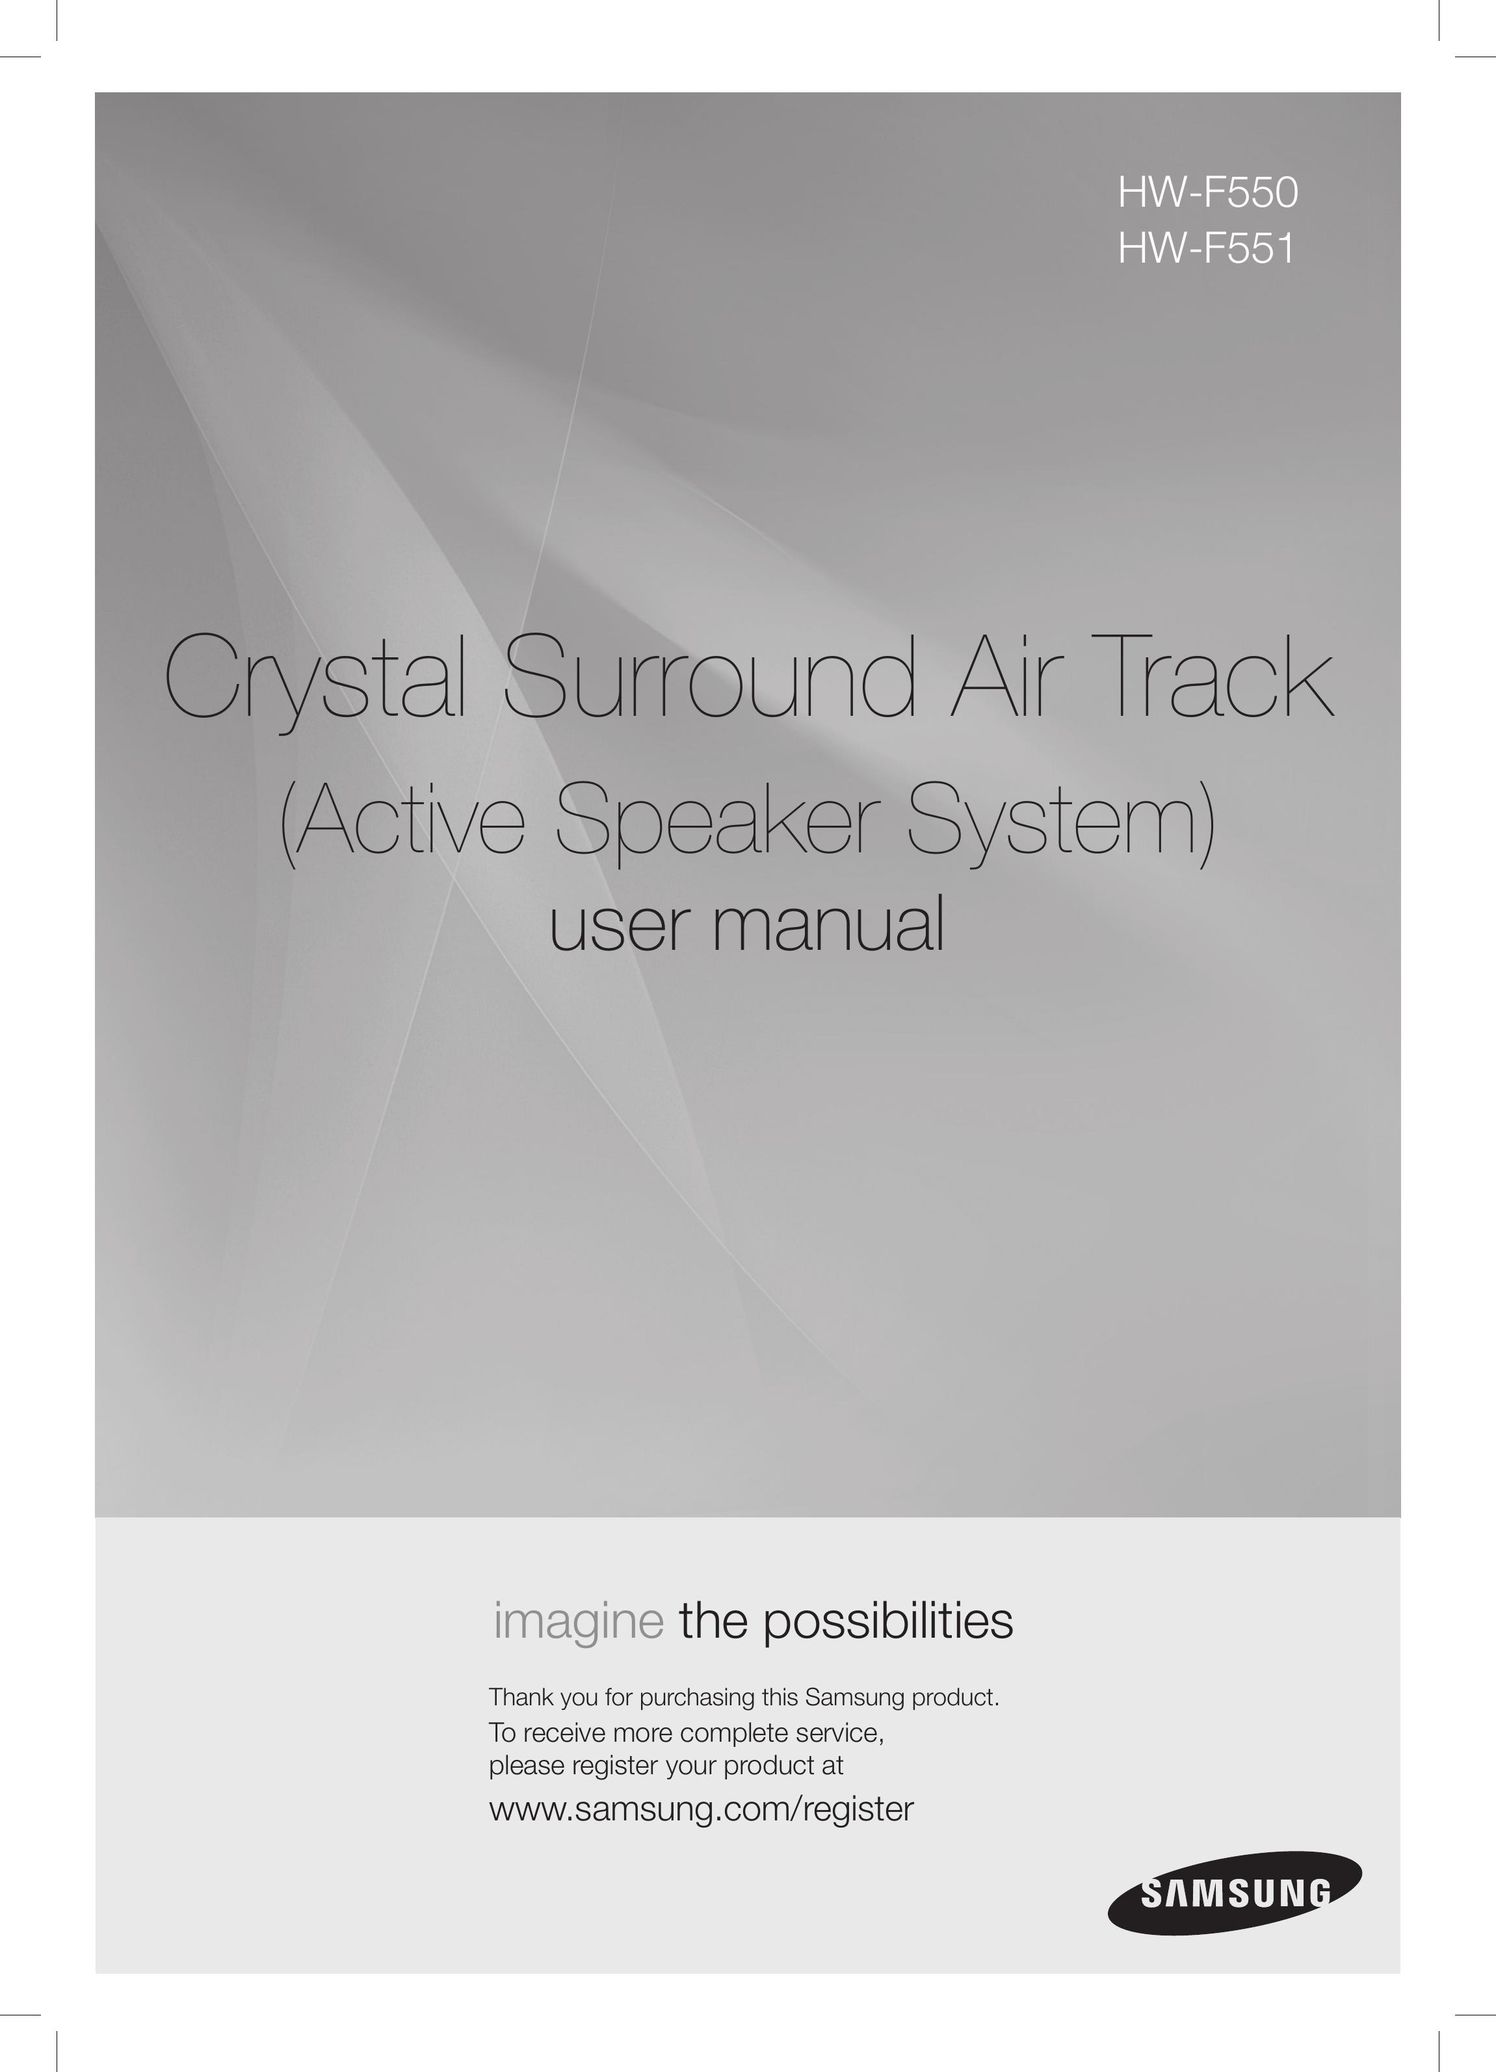 Samsung HW F551 Speaker System User Manual